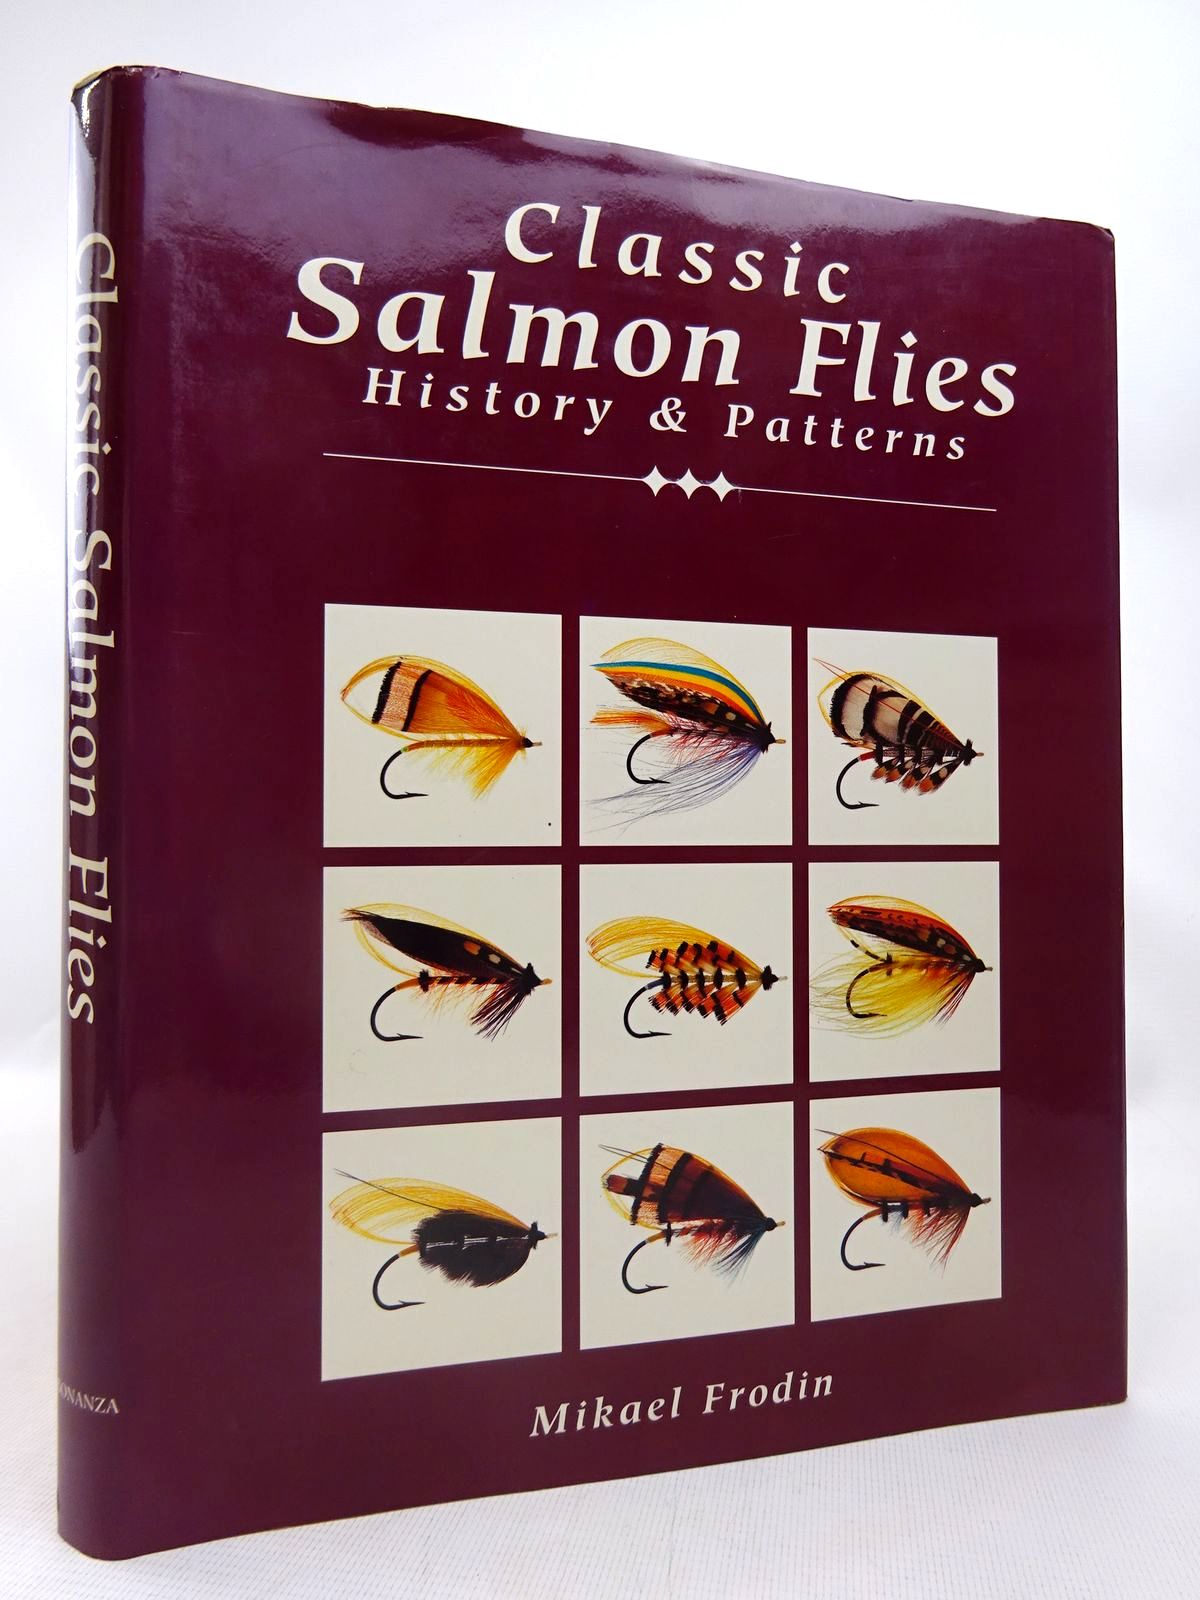 Classic Salmon Flies History & Patterns